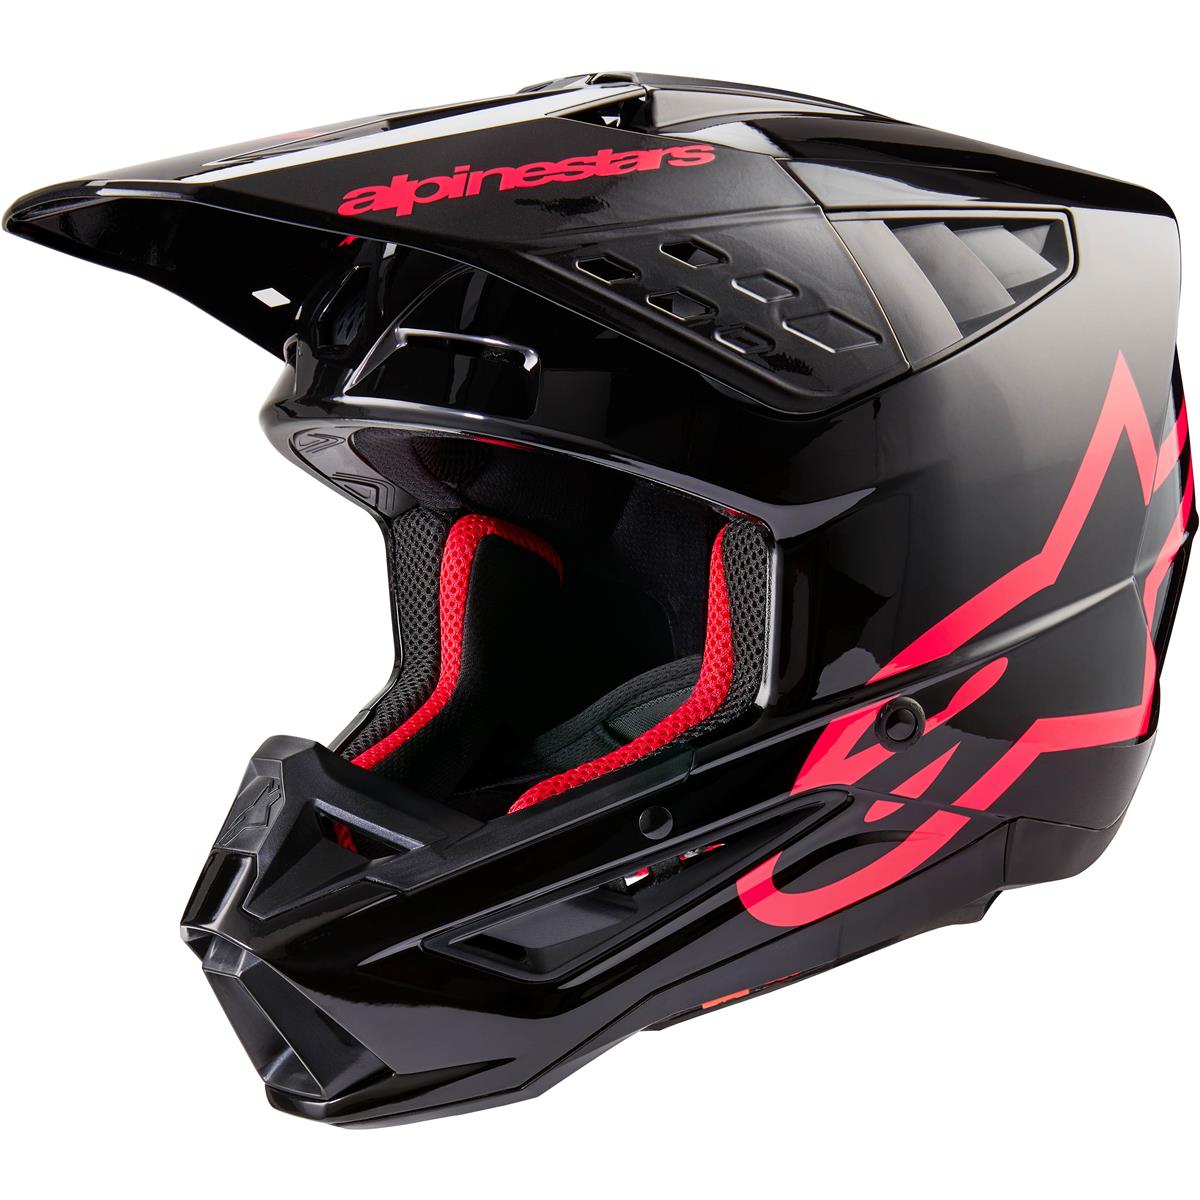 Alpinestars Motocross-Helm S-M5 Corp - Schwarz/Diva Pink/Glossy